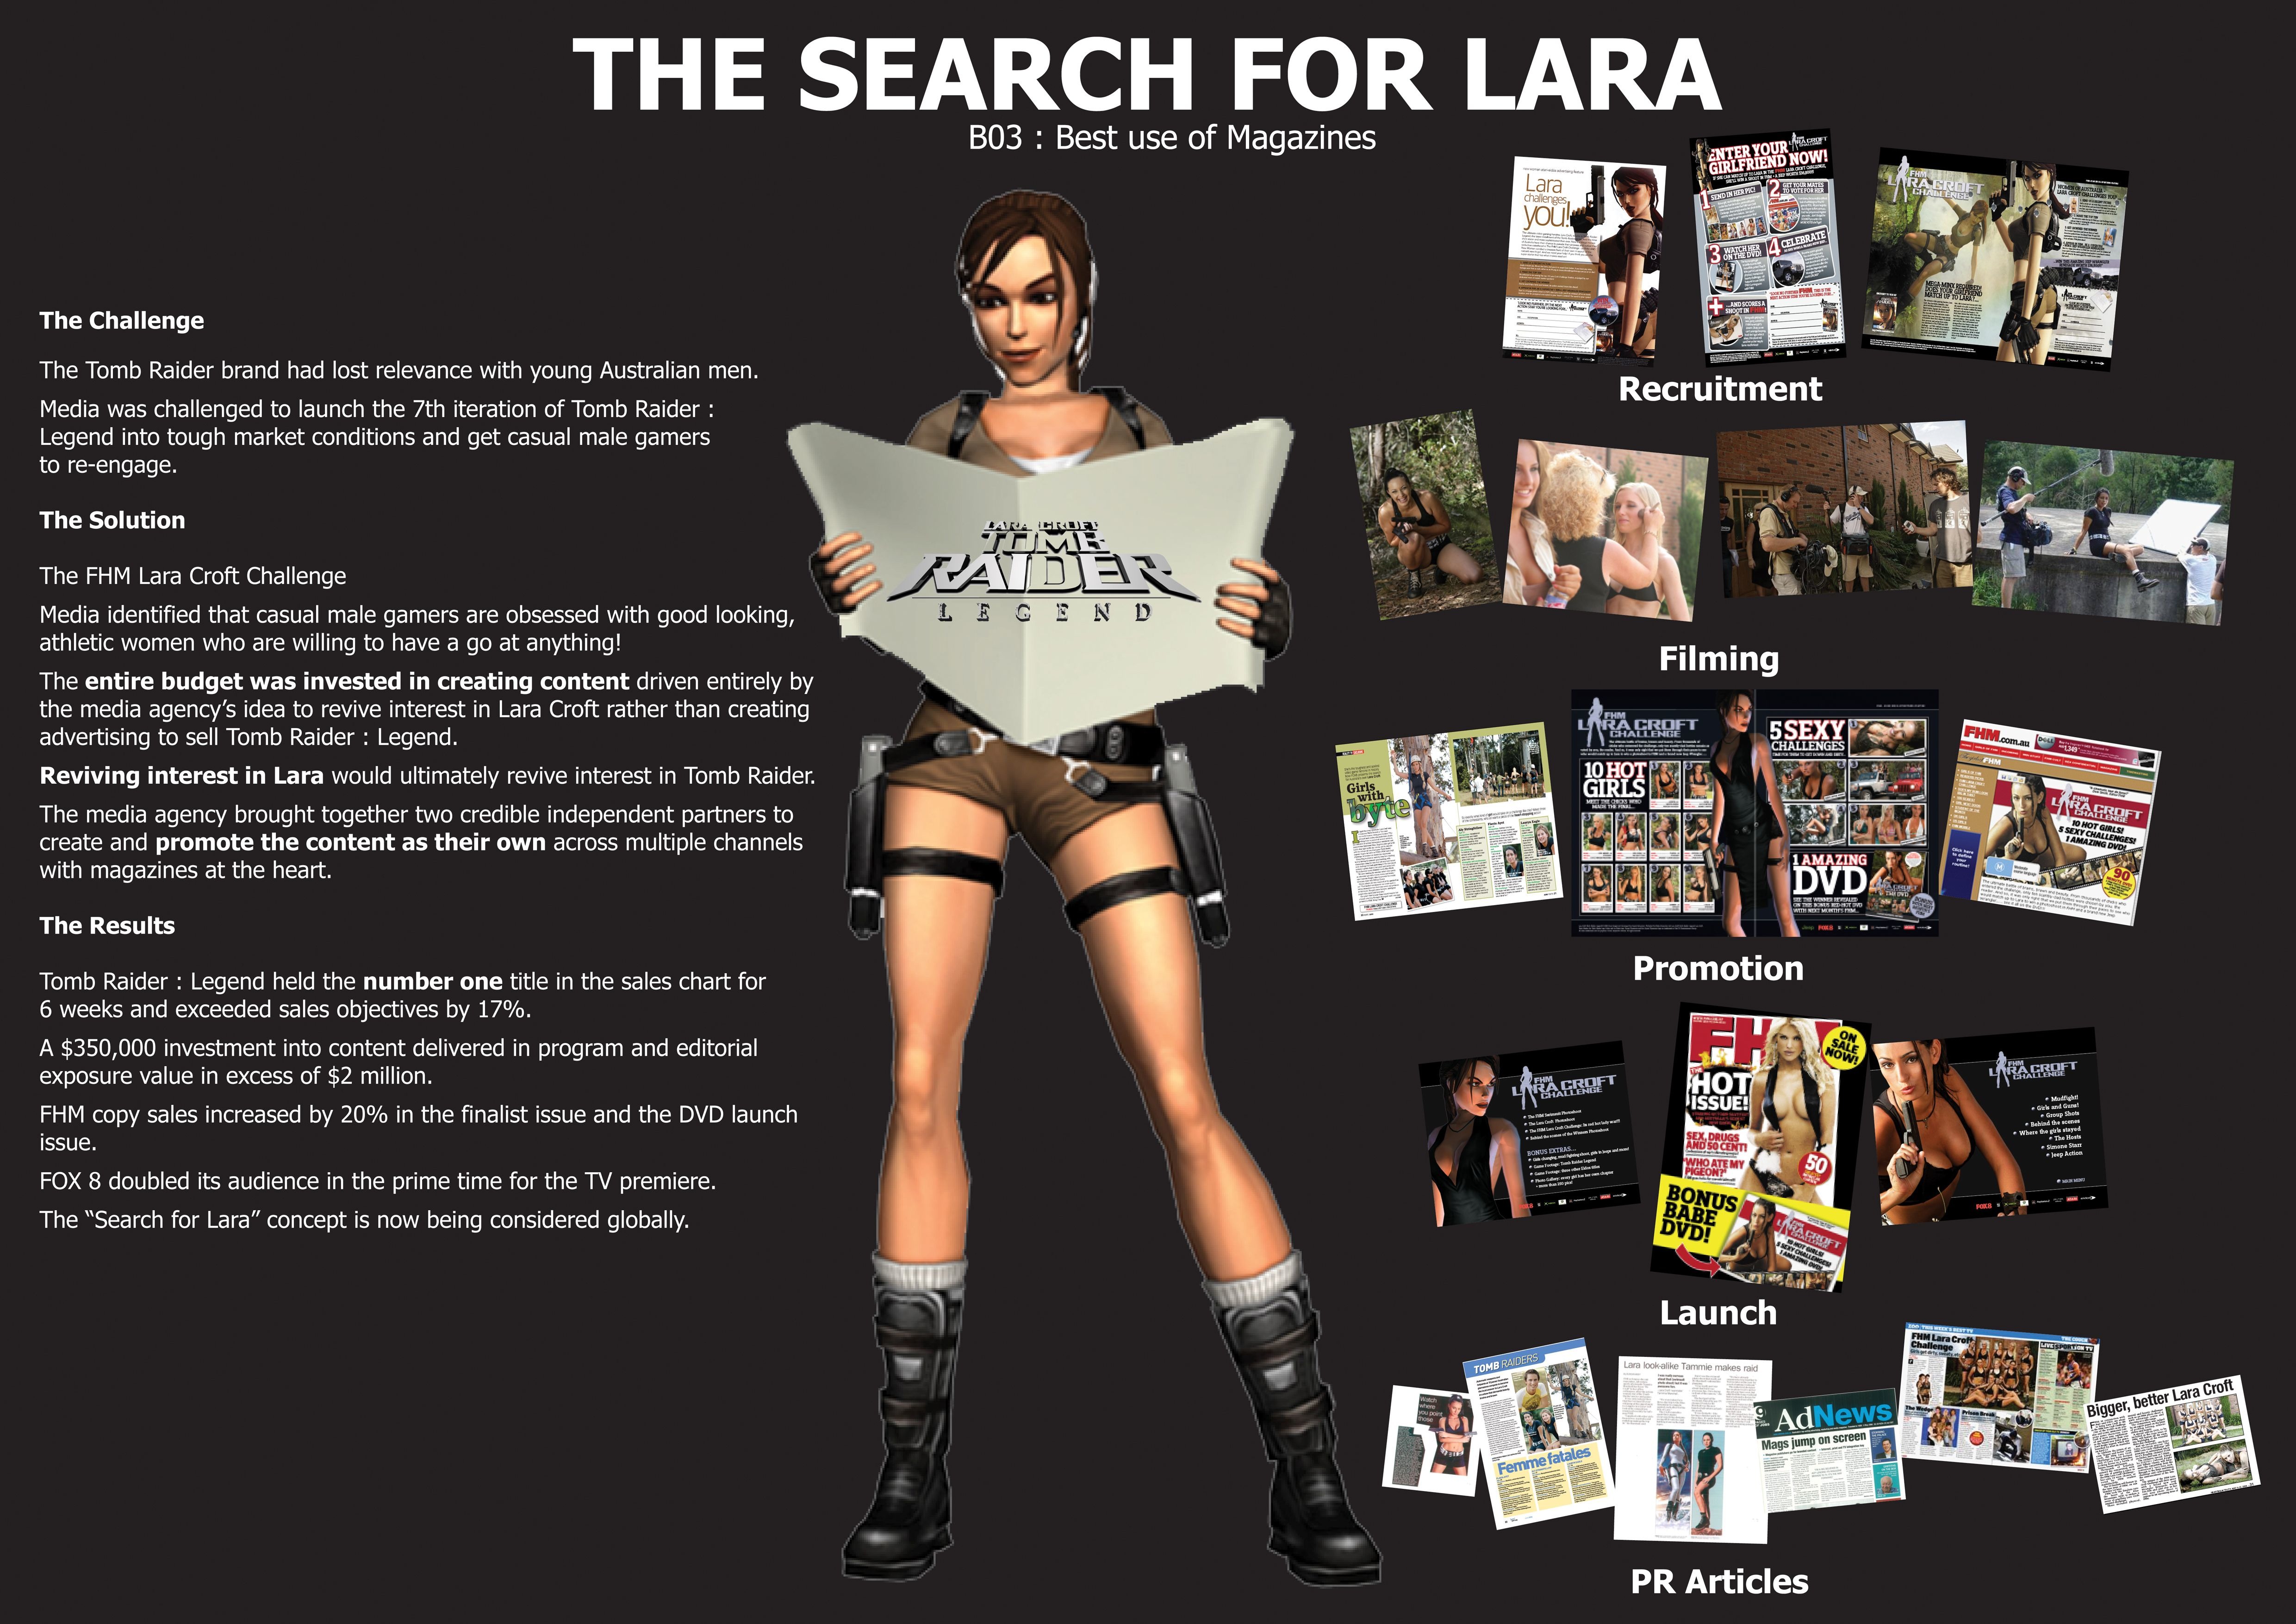 SEARCH FOR LARA